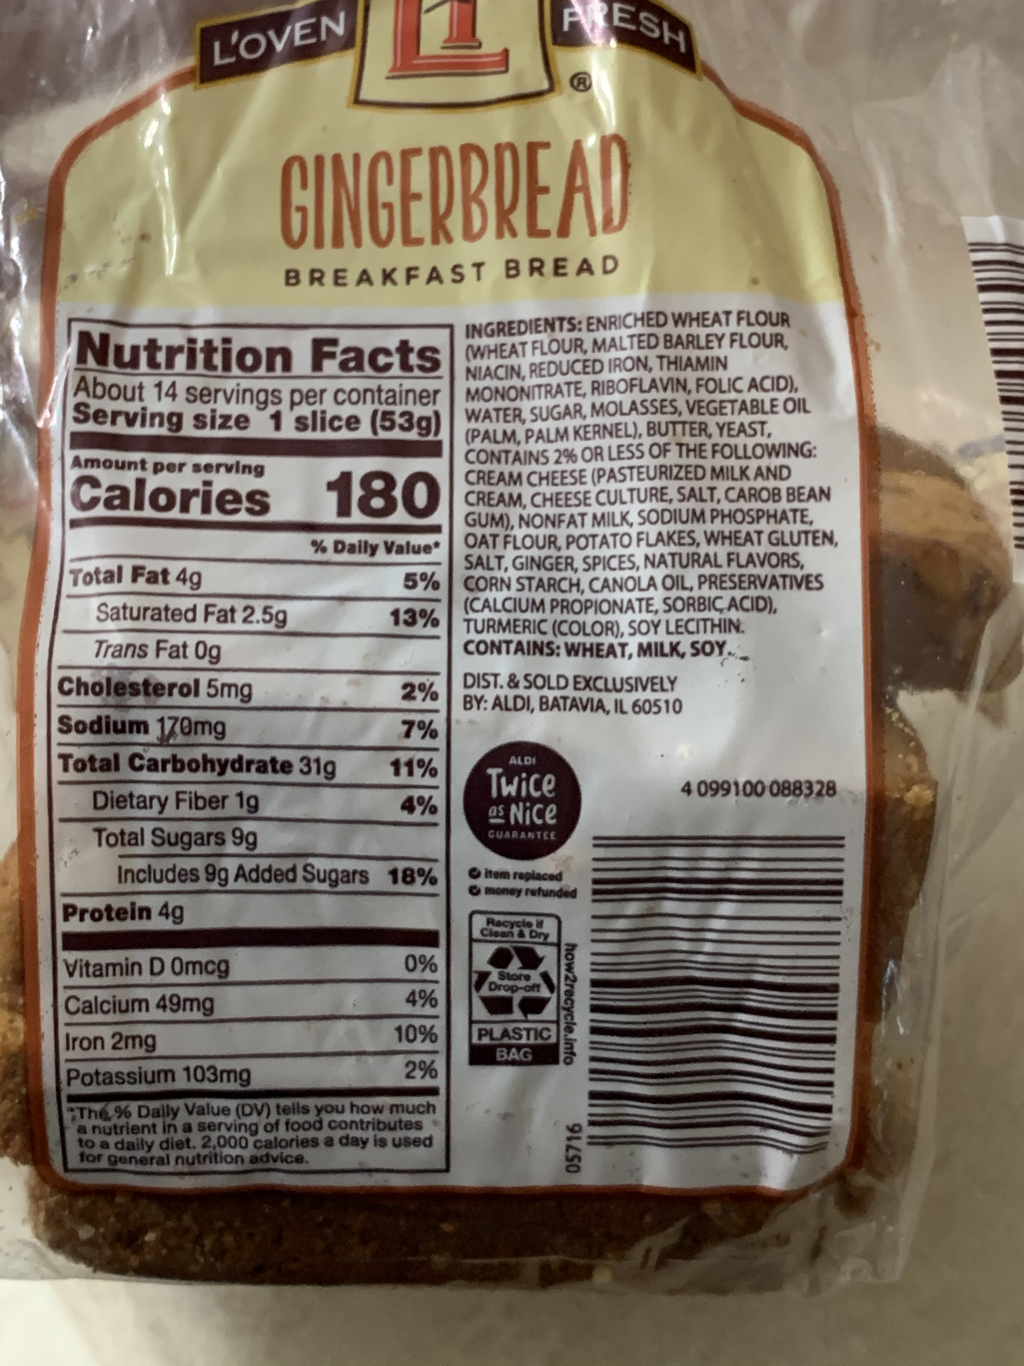 Aldi Review - L’oven Fresh Gingerbread Breakfast Bread